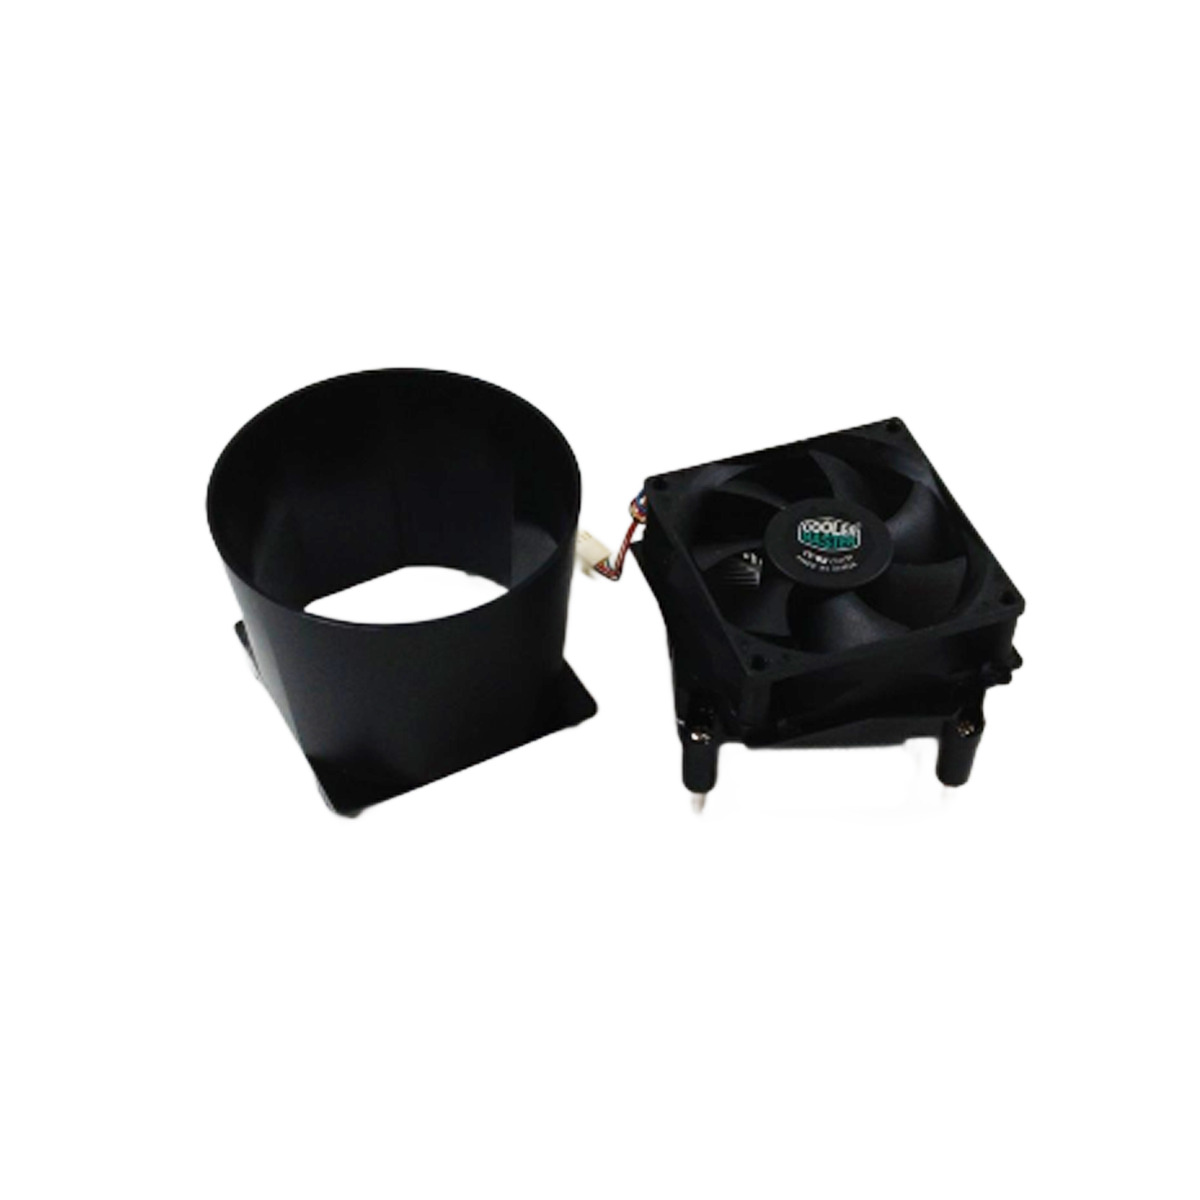 Cooler Master CPU Fan Heatsink Kit with Air Duct for Socket LGA 775